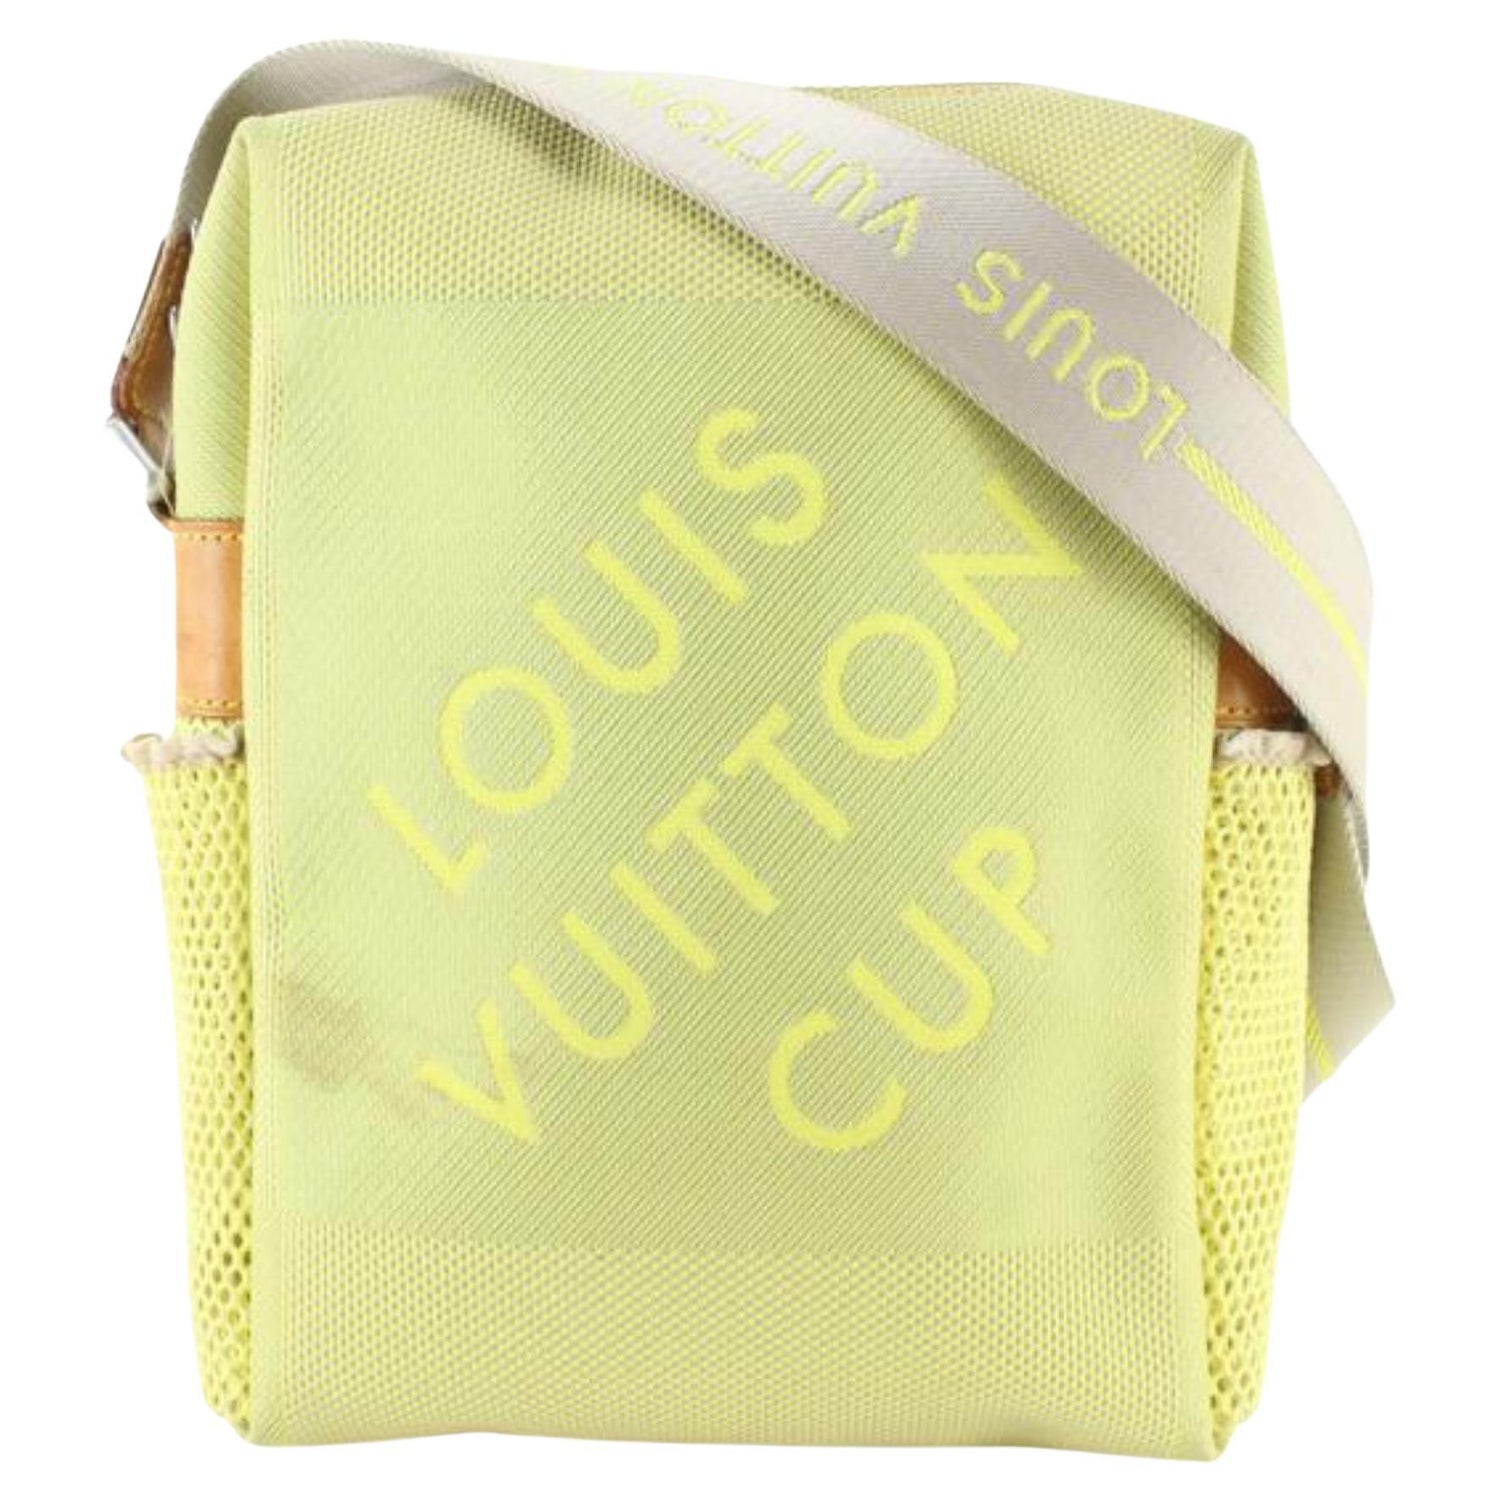 Louis Vuitton Green Damier Geant Neon Lv Cup Organizer 236455 Wallet, Louis  Vuitton